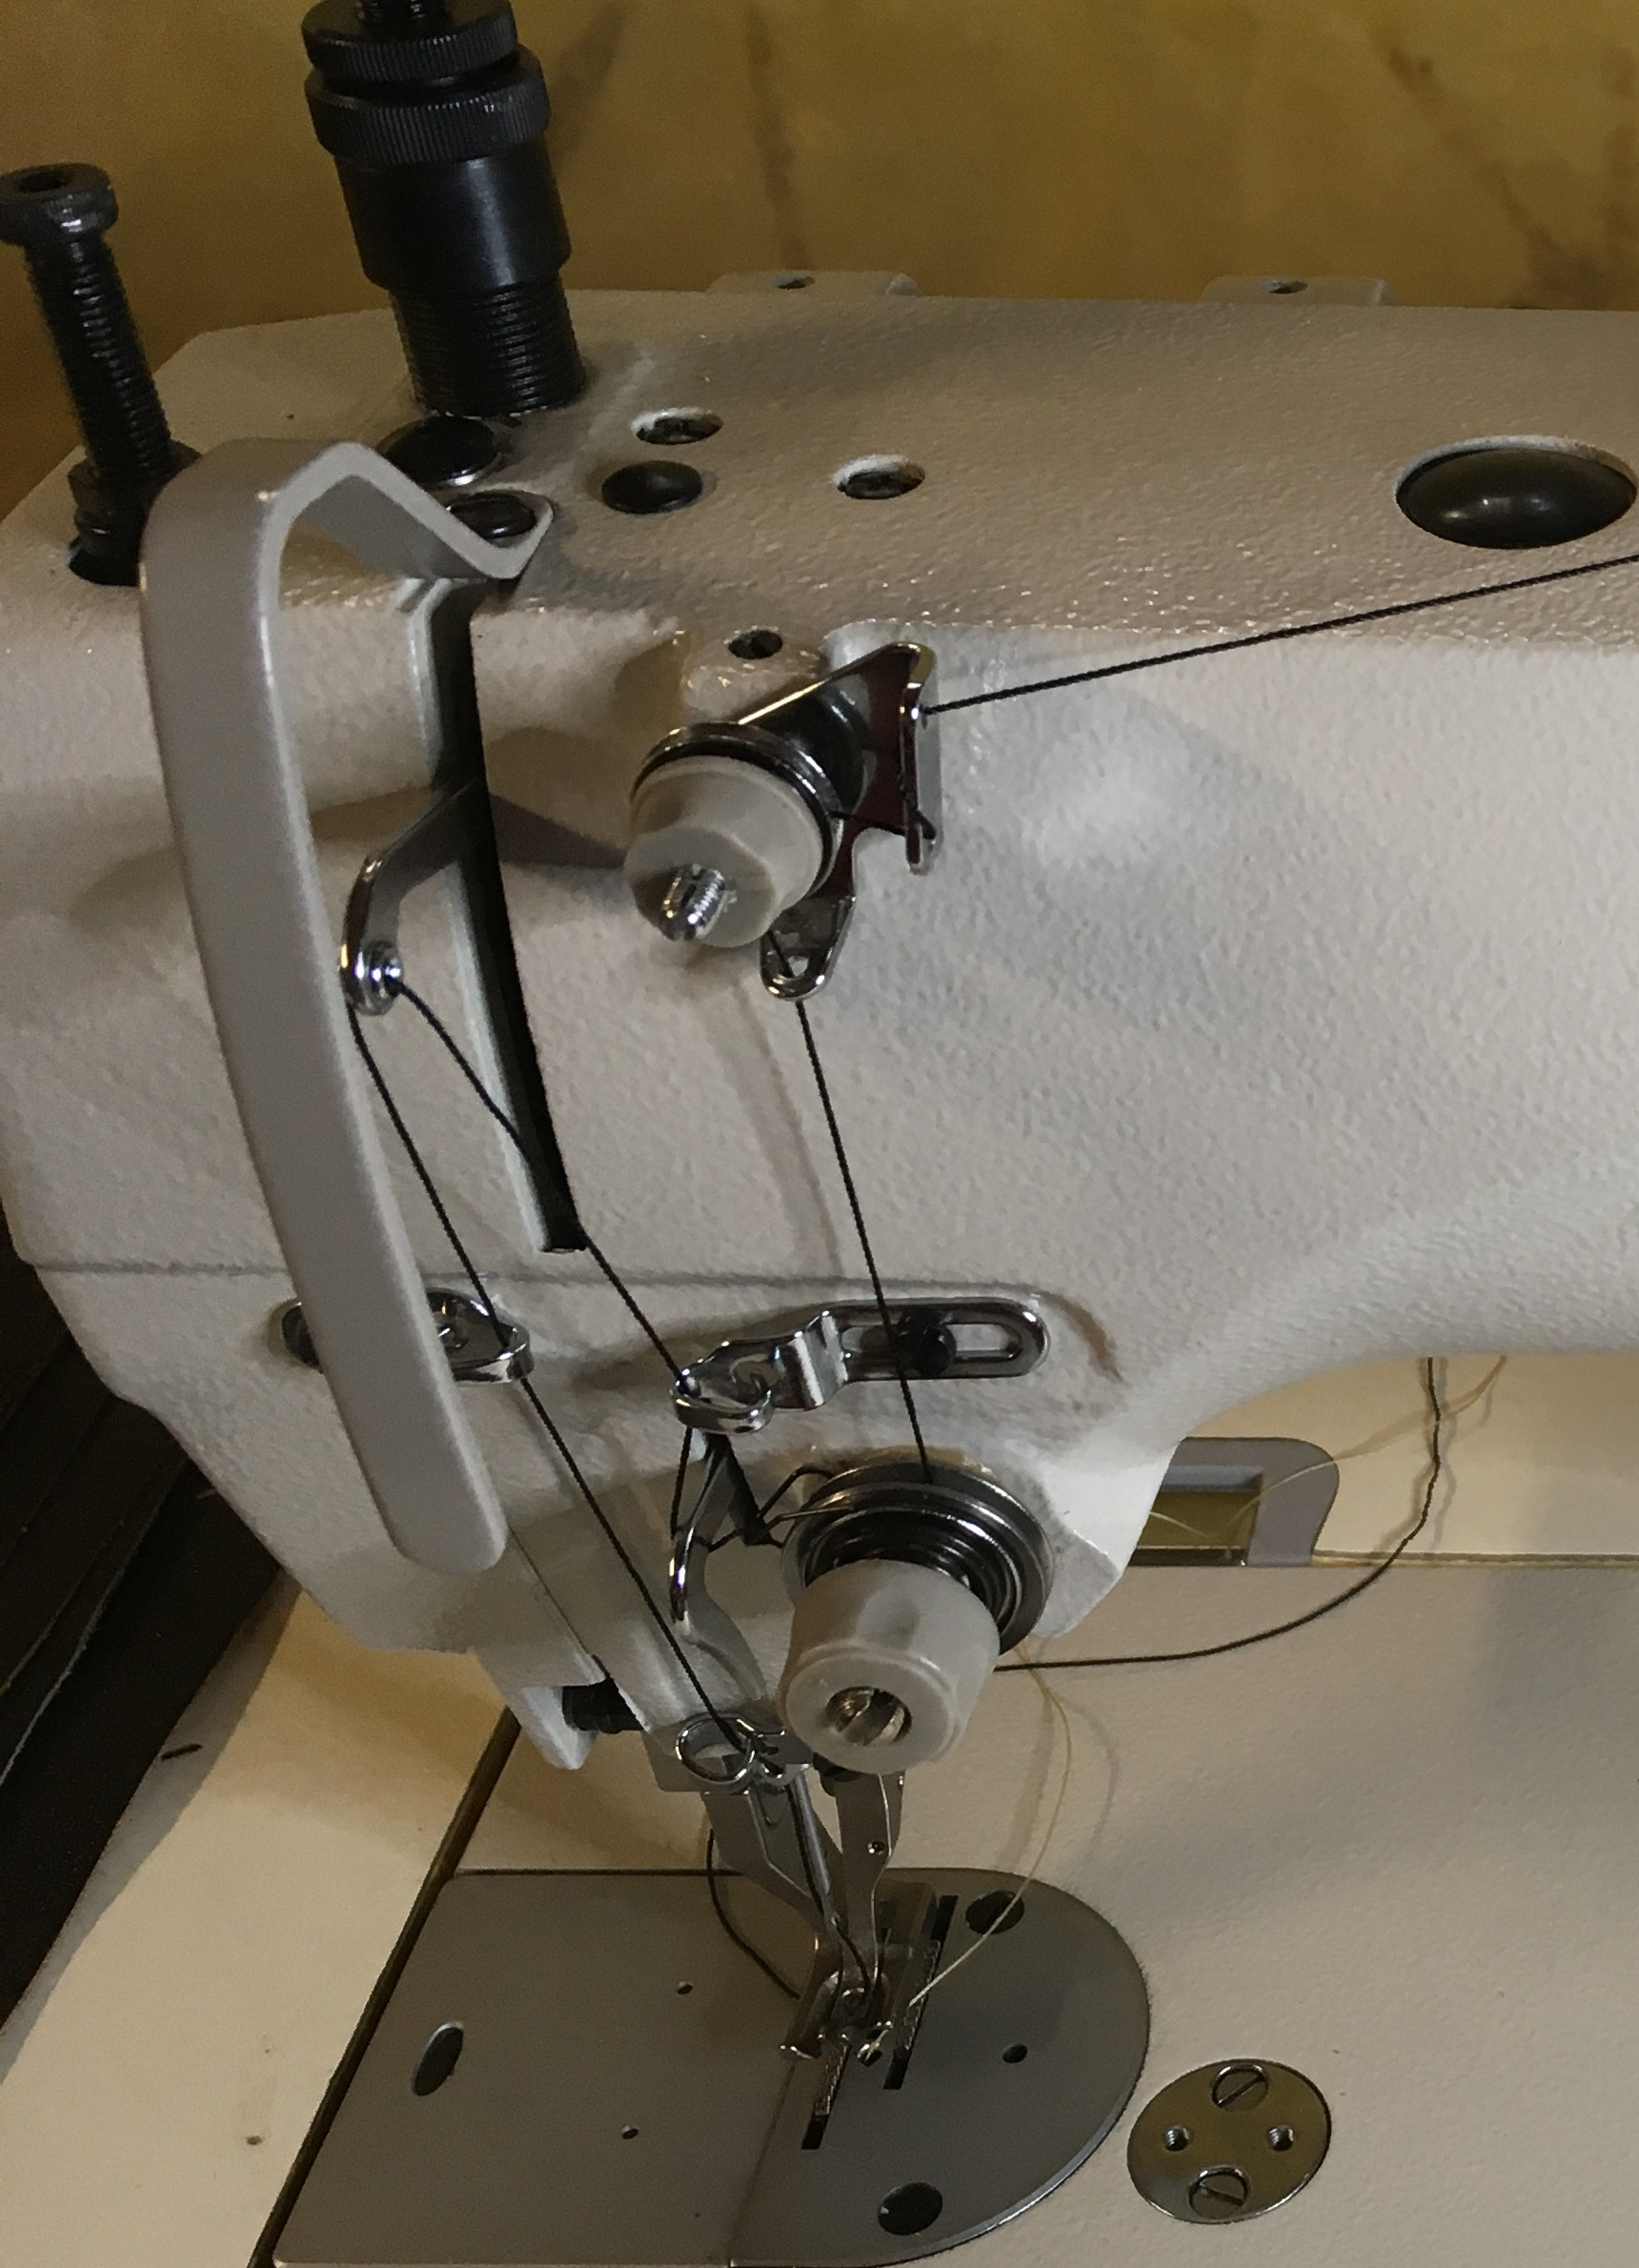 Narrow smooth presser foot for Juki DU-1181N - Sewing Gold